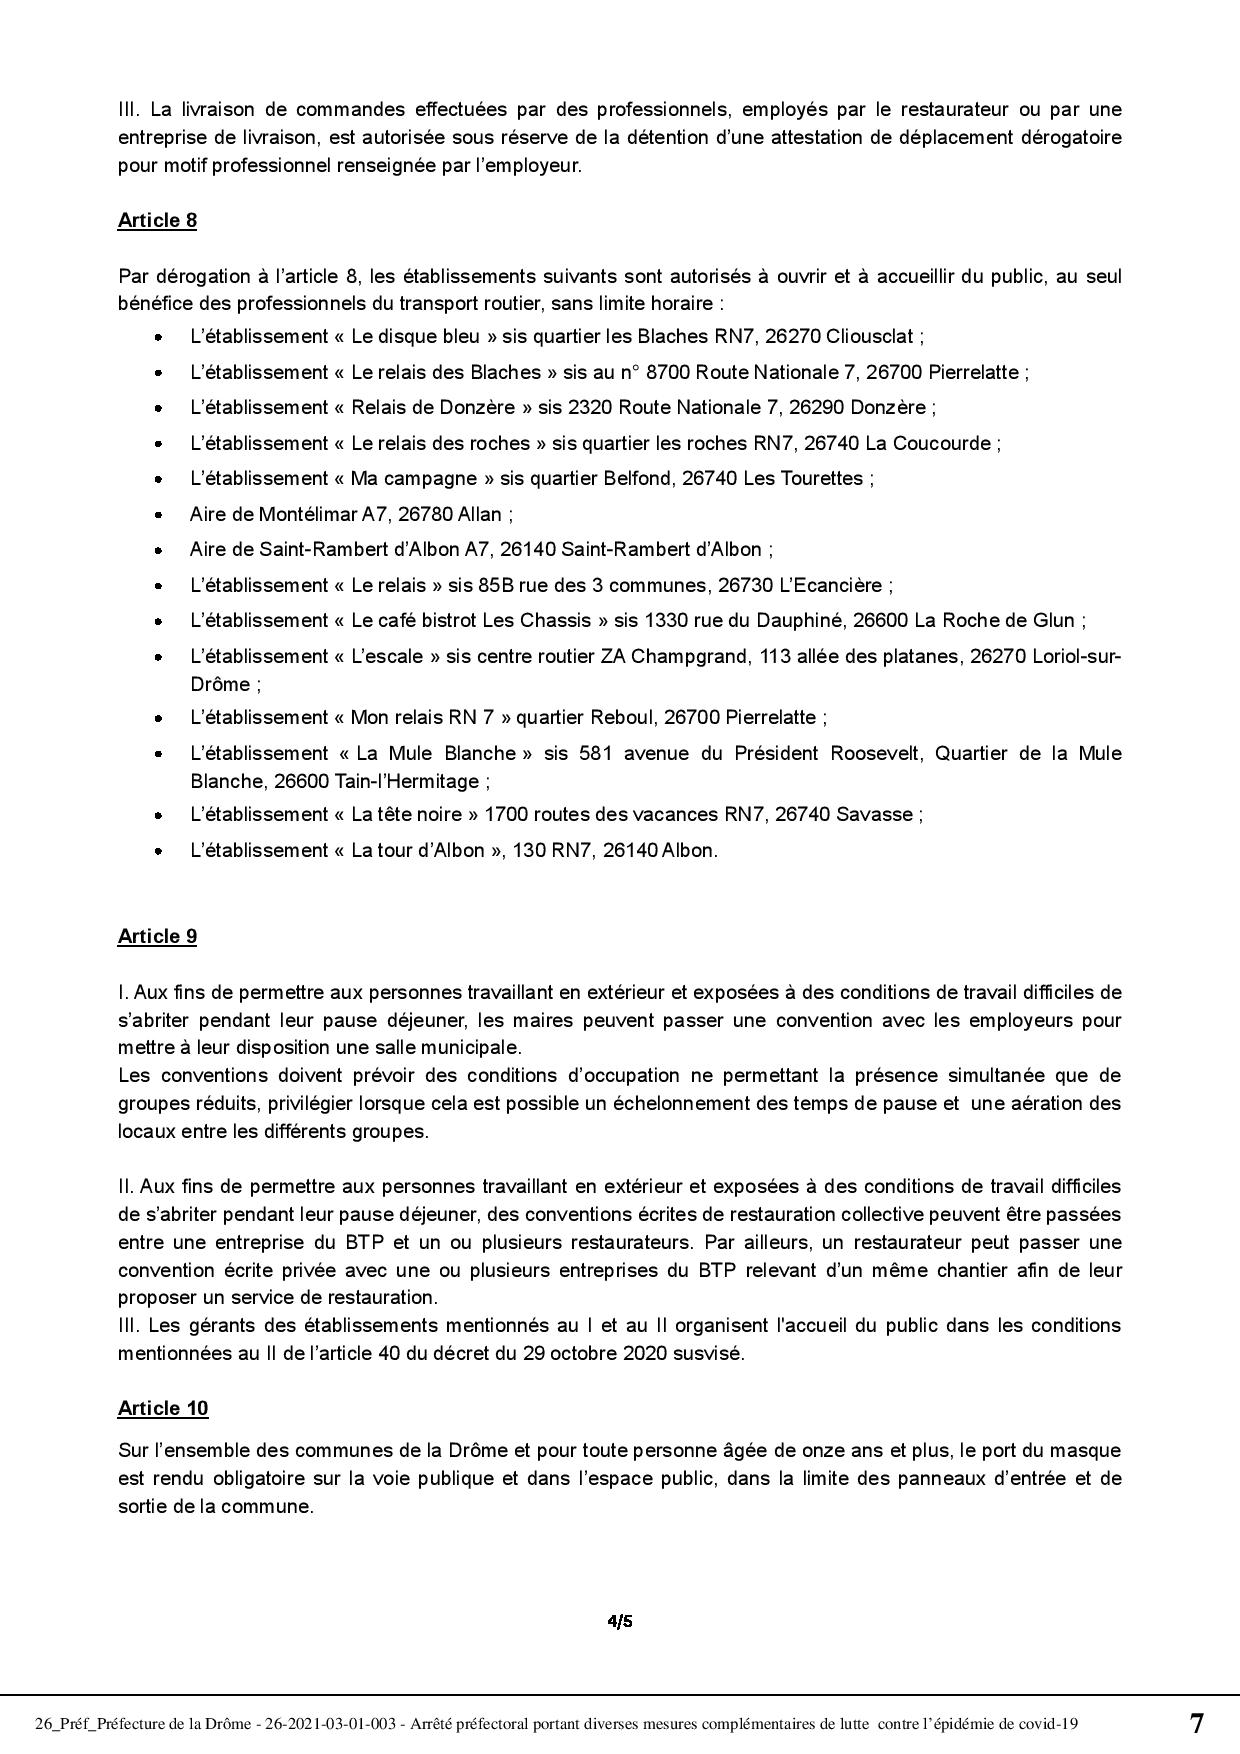 recueil-26-2021-043-recueil-des-actes-administratifs-special_1_-2-page-007.jpg